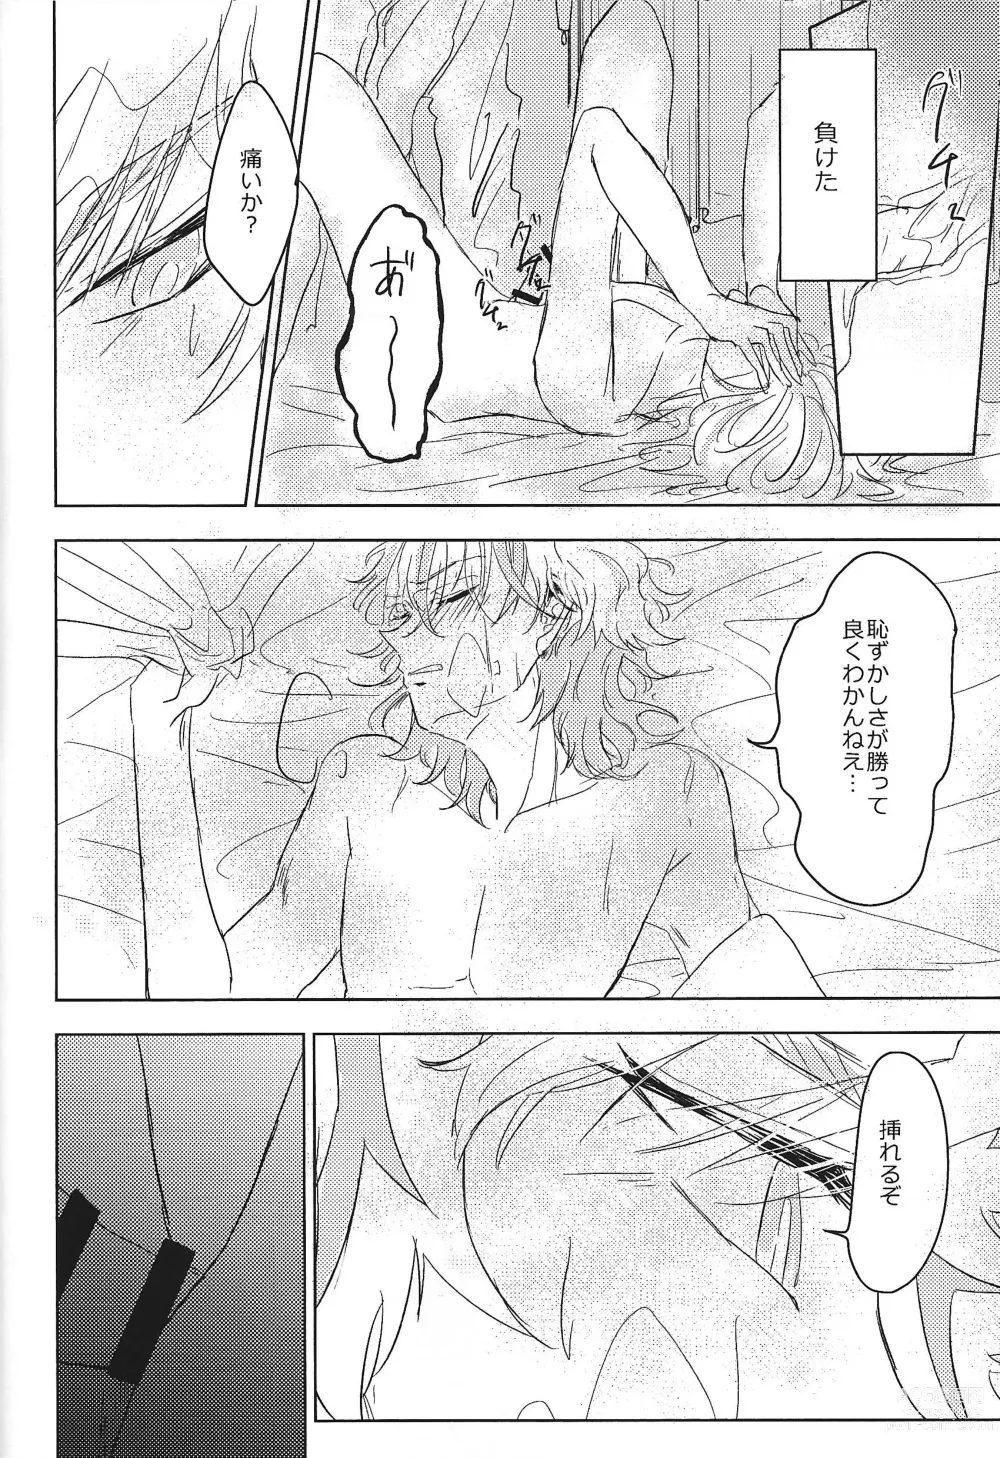 Page 13 of doujinshi Mikanseina